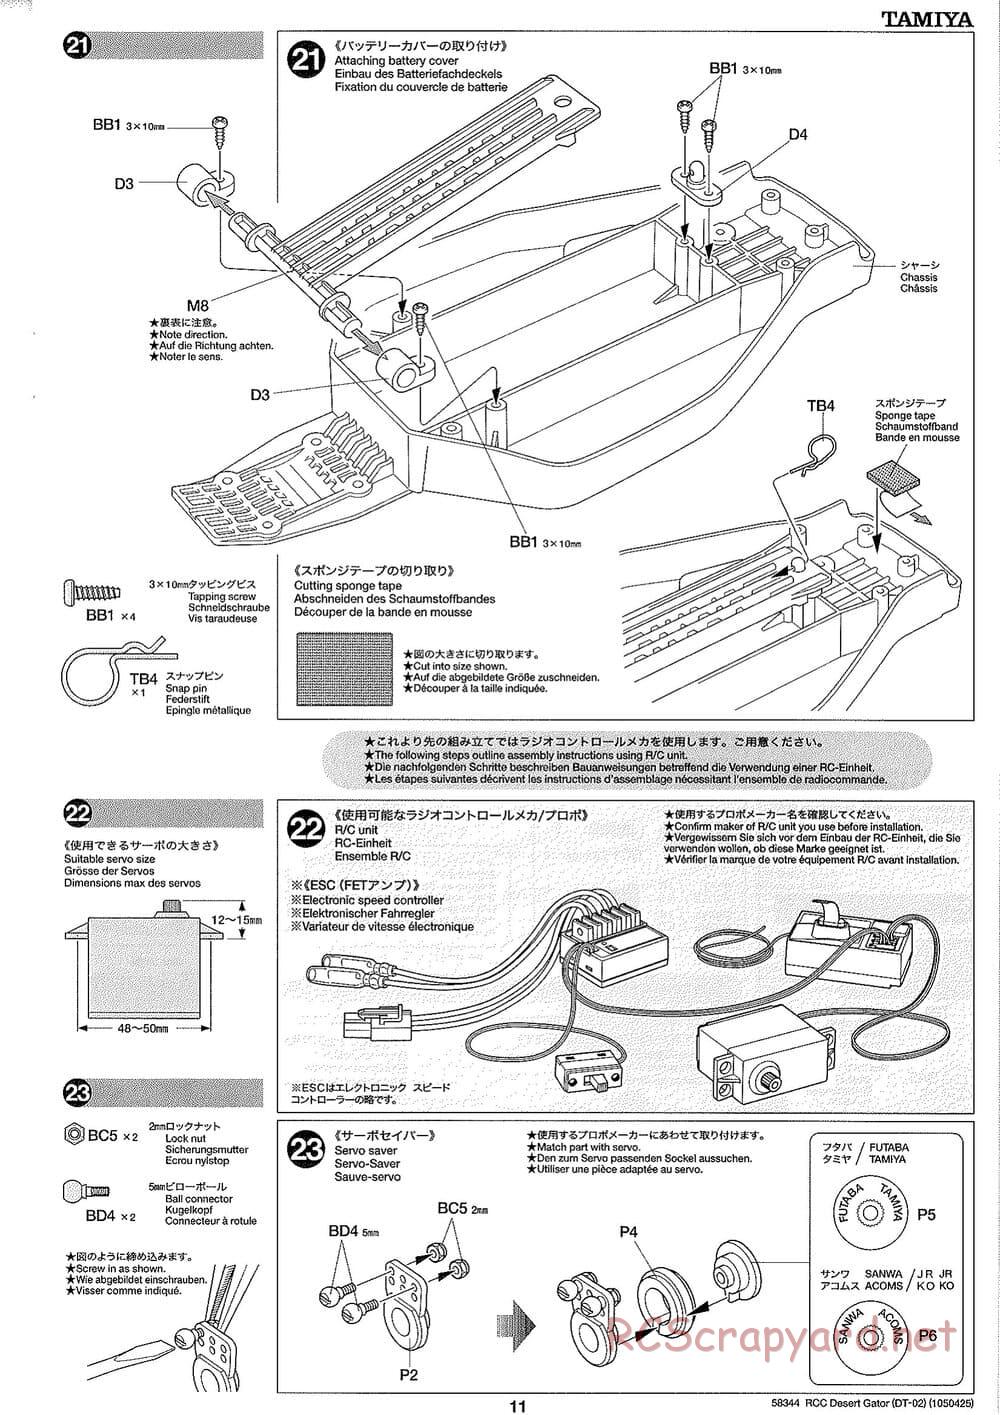 Tamiya - Desert Gator Chassis - Manual - Page 11